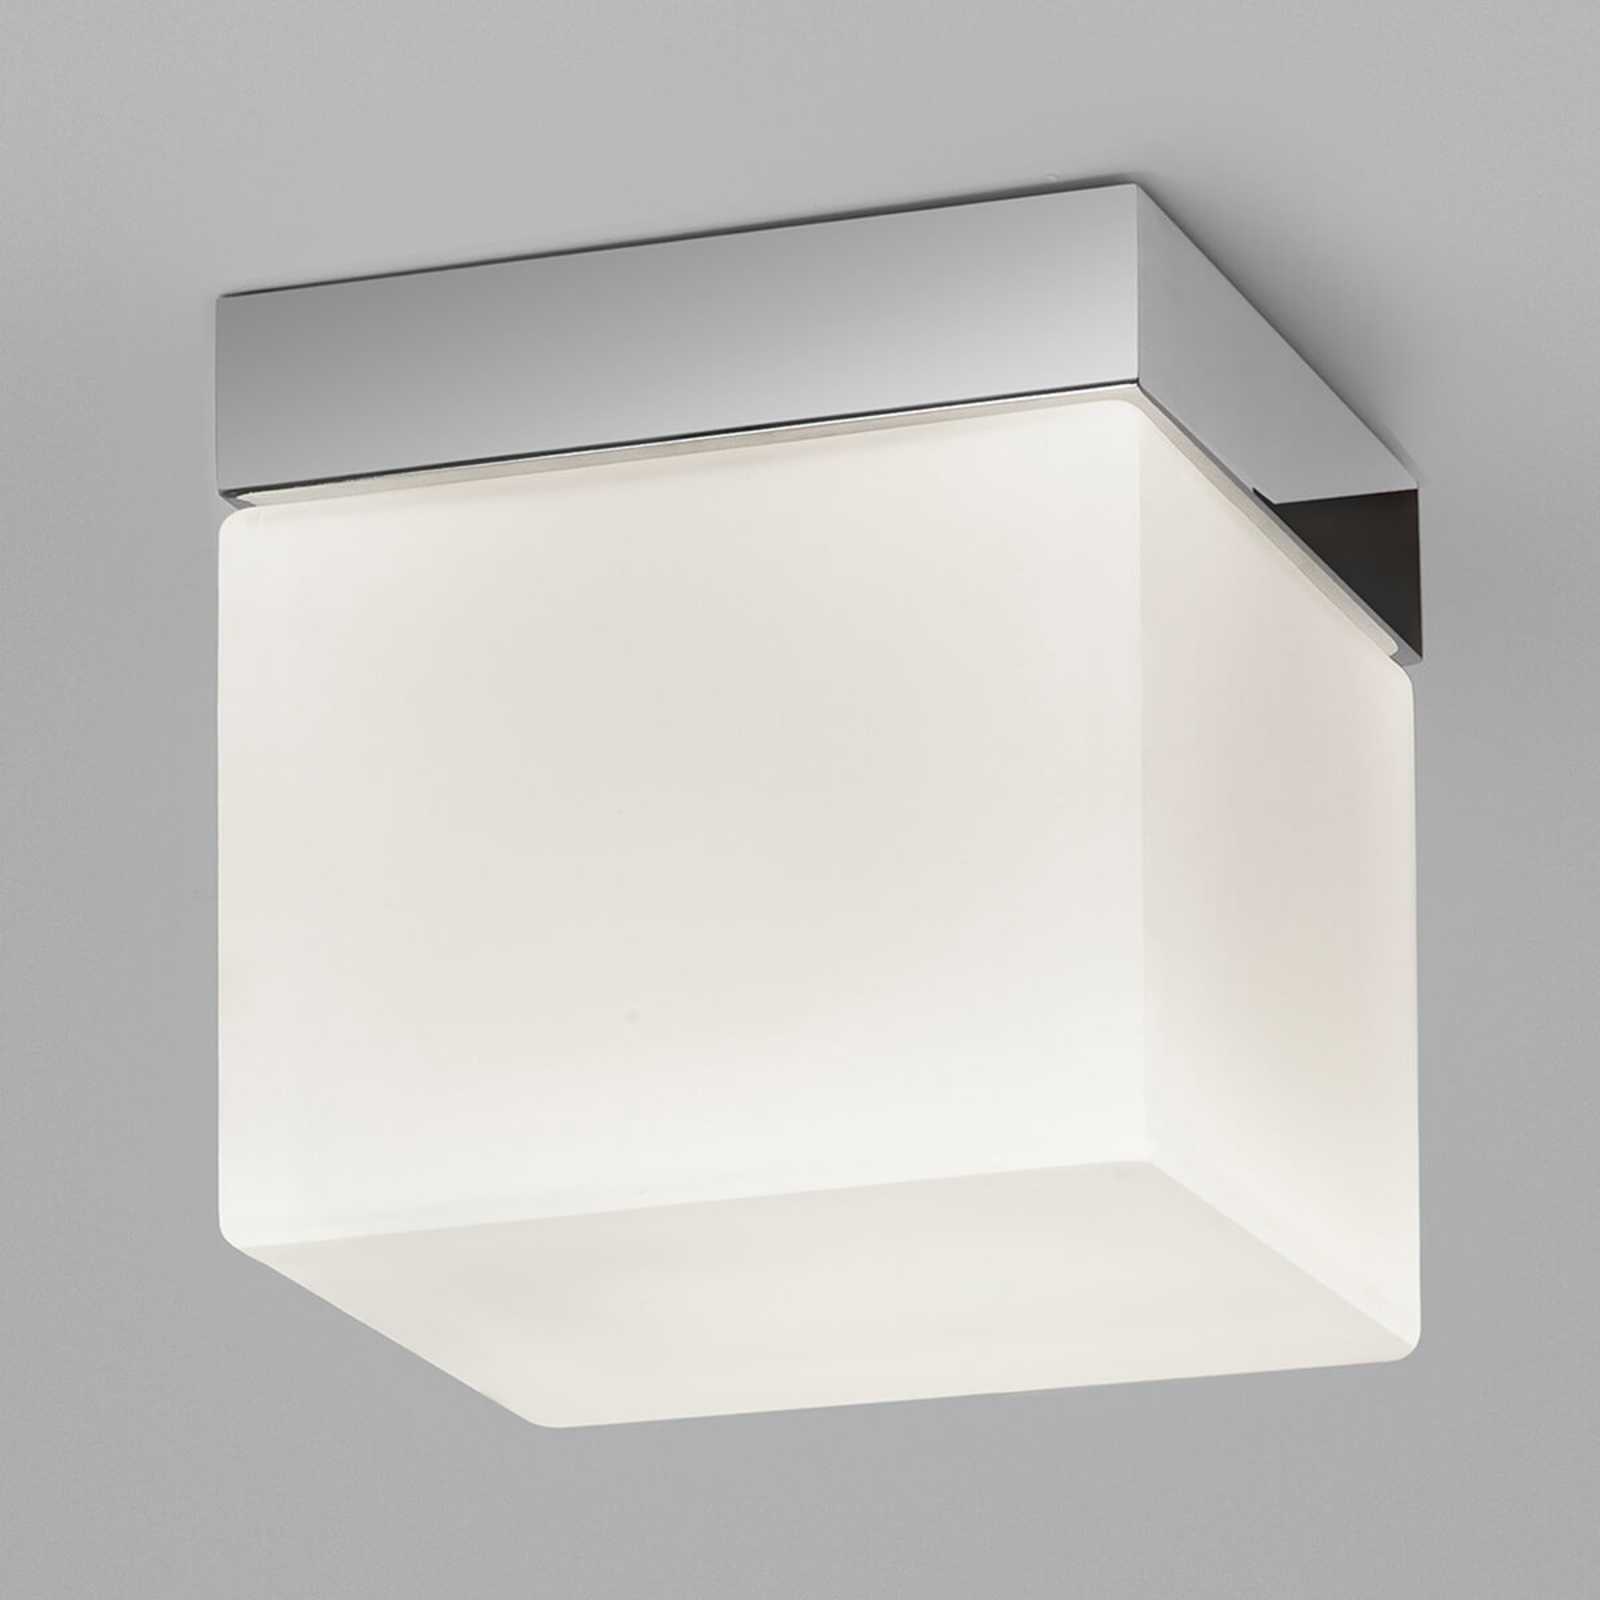 Cube-shaped Sabrina Square ceiling light IP44